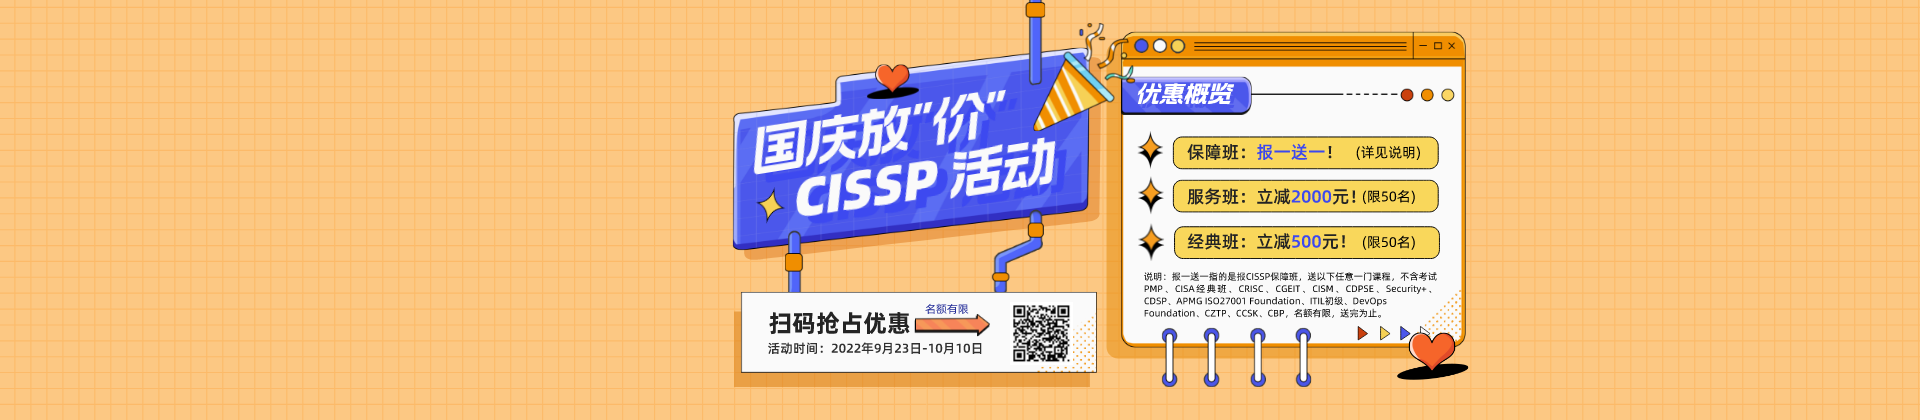 CISSP国庆活动